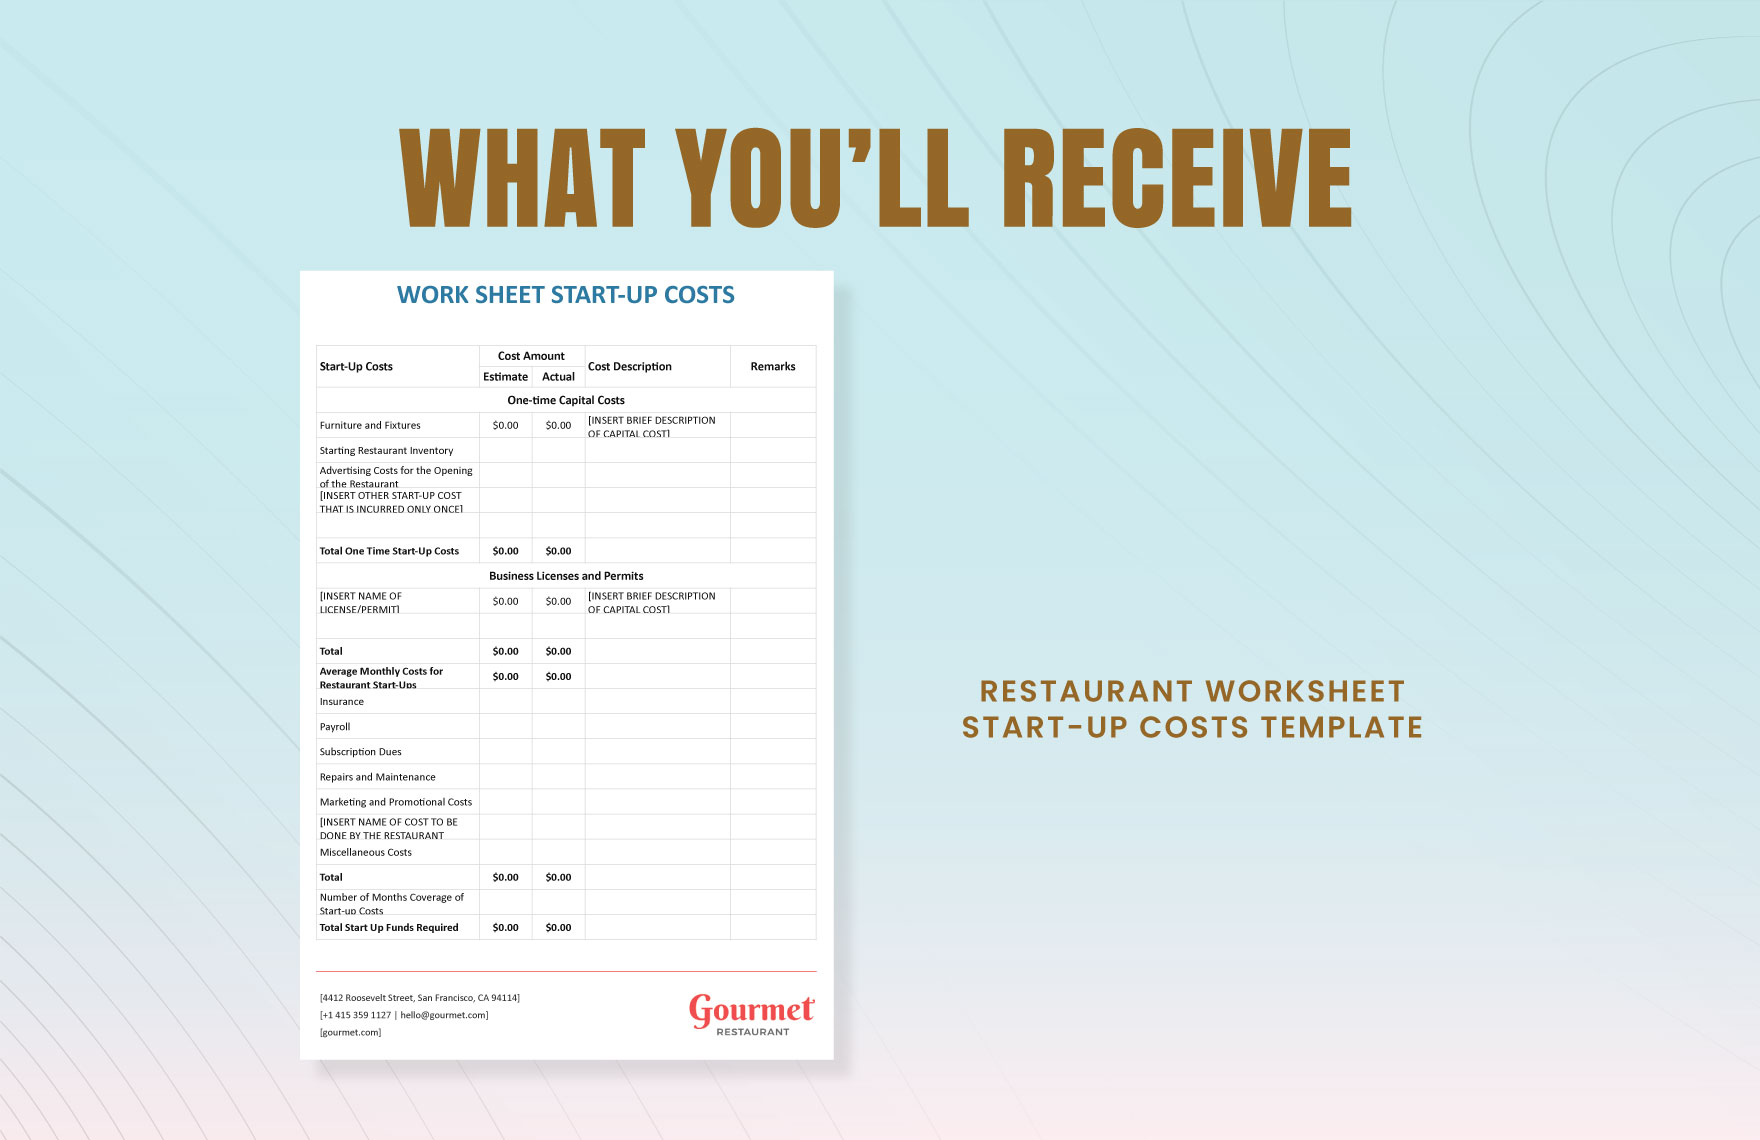 Restaurant Worksheet StartUp Costs Instructions